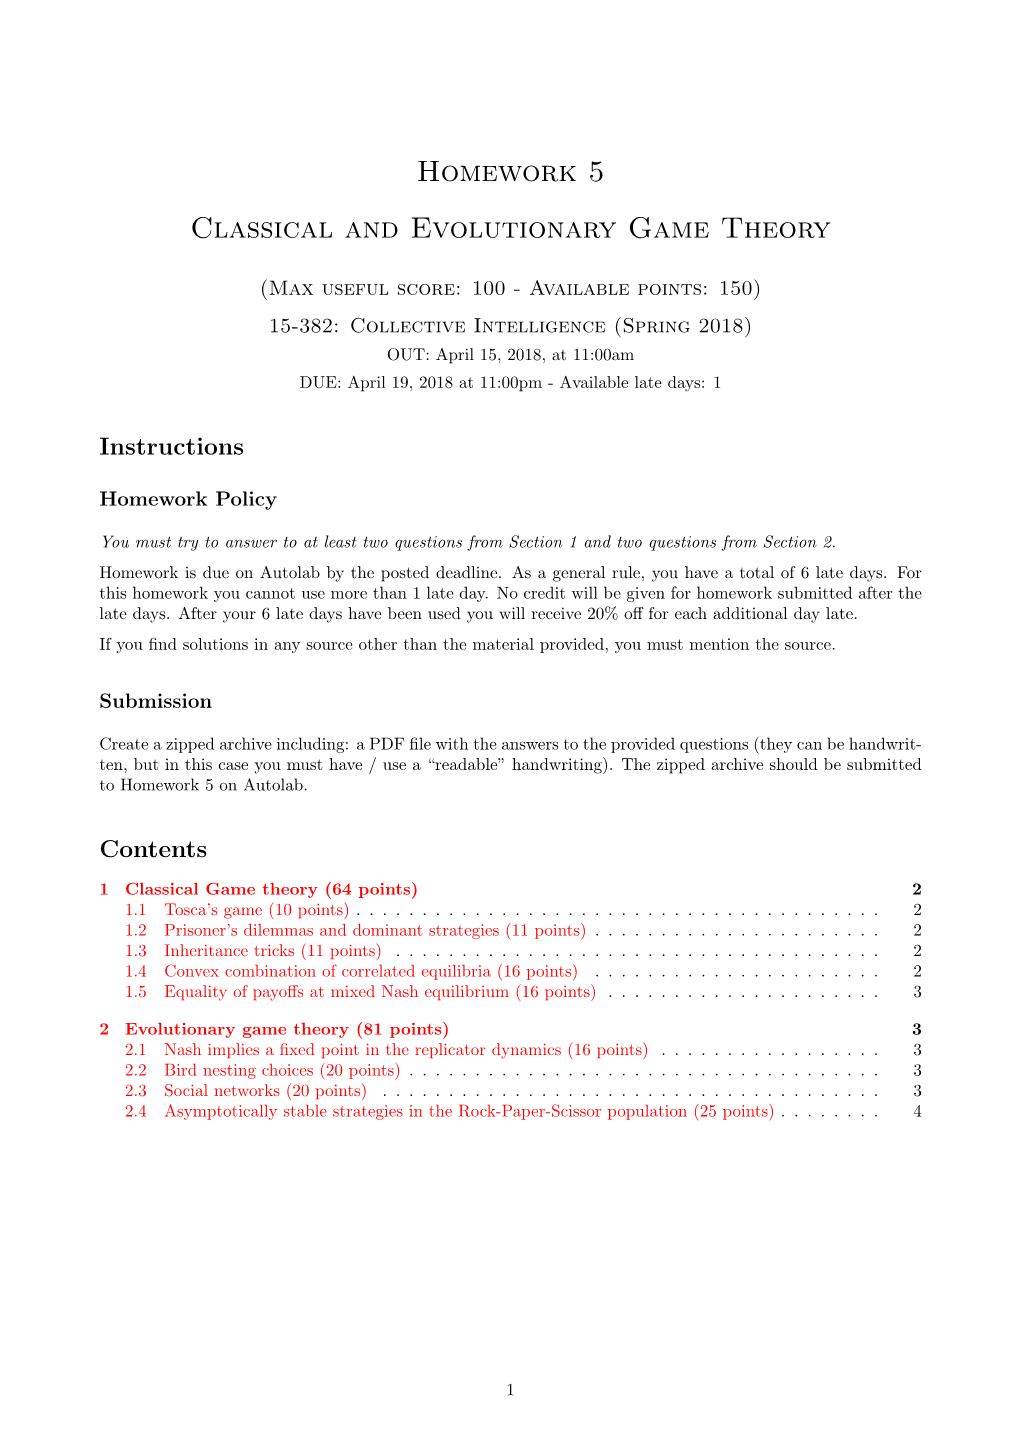 Homework 5 Classical and Evolutionary Game Theory